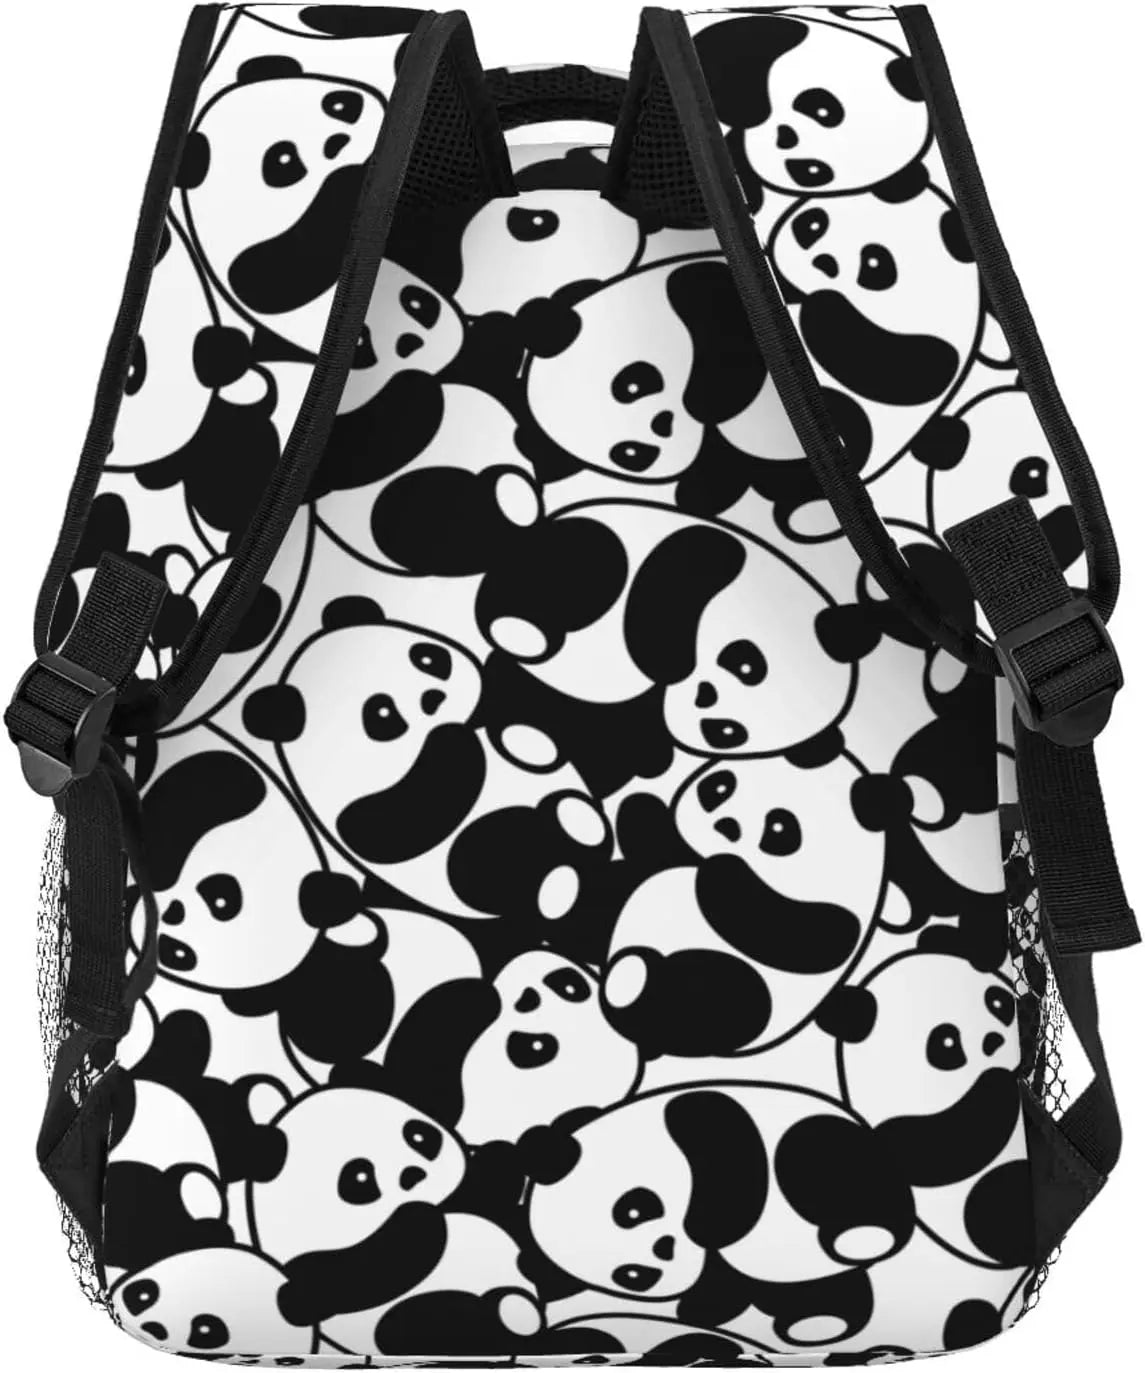 Adorable Panda Backpack